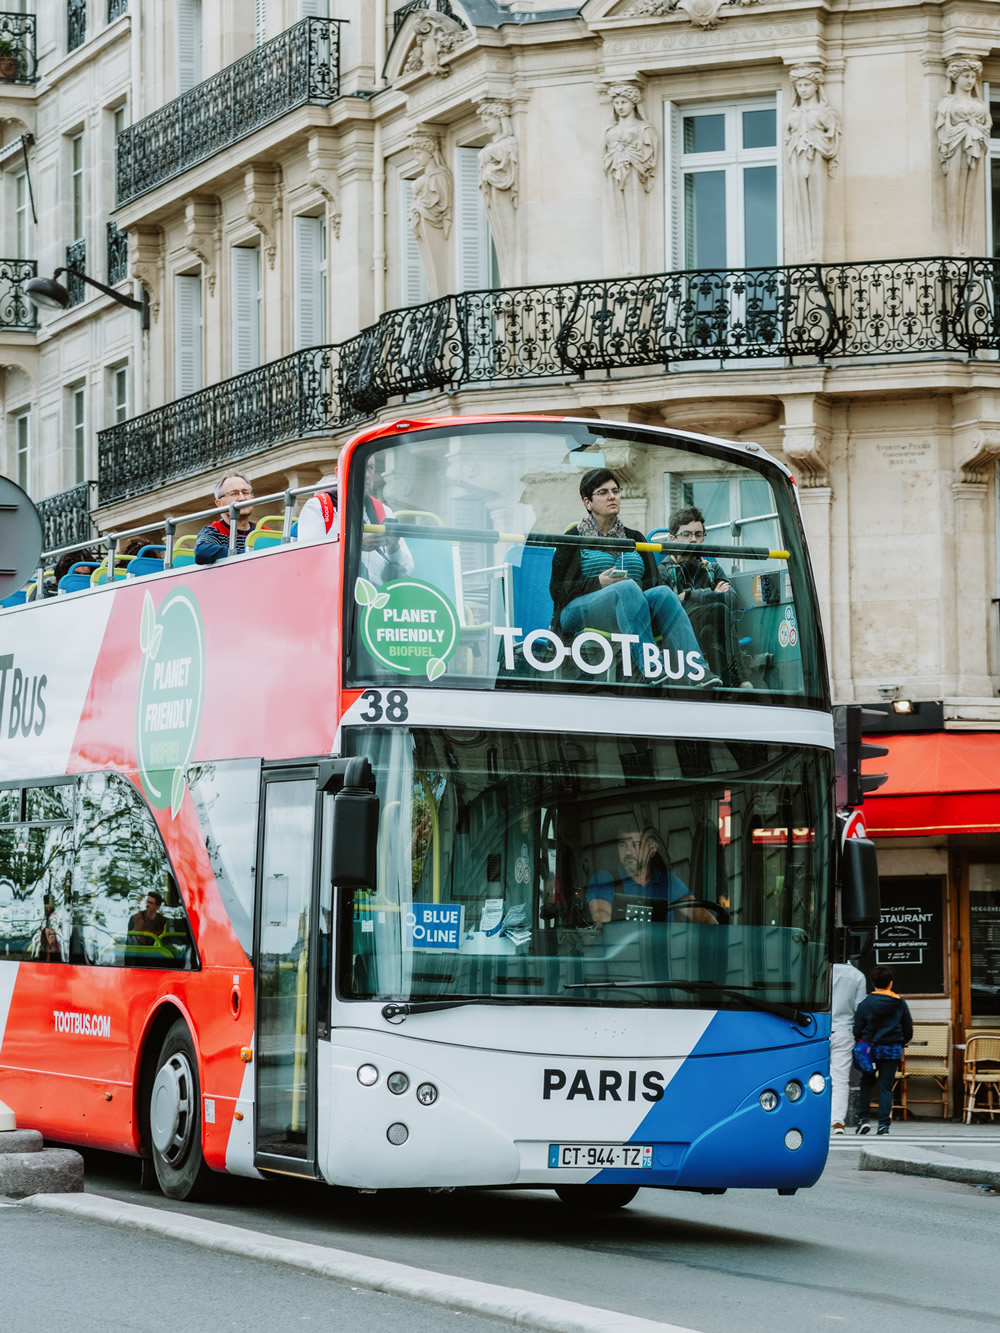 Hop on hop off bus Paris Tootbus Big Bus